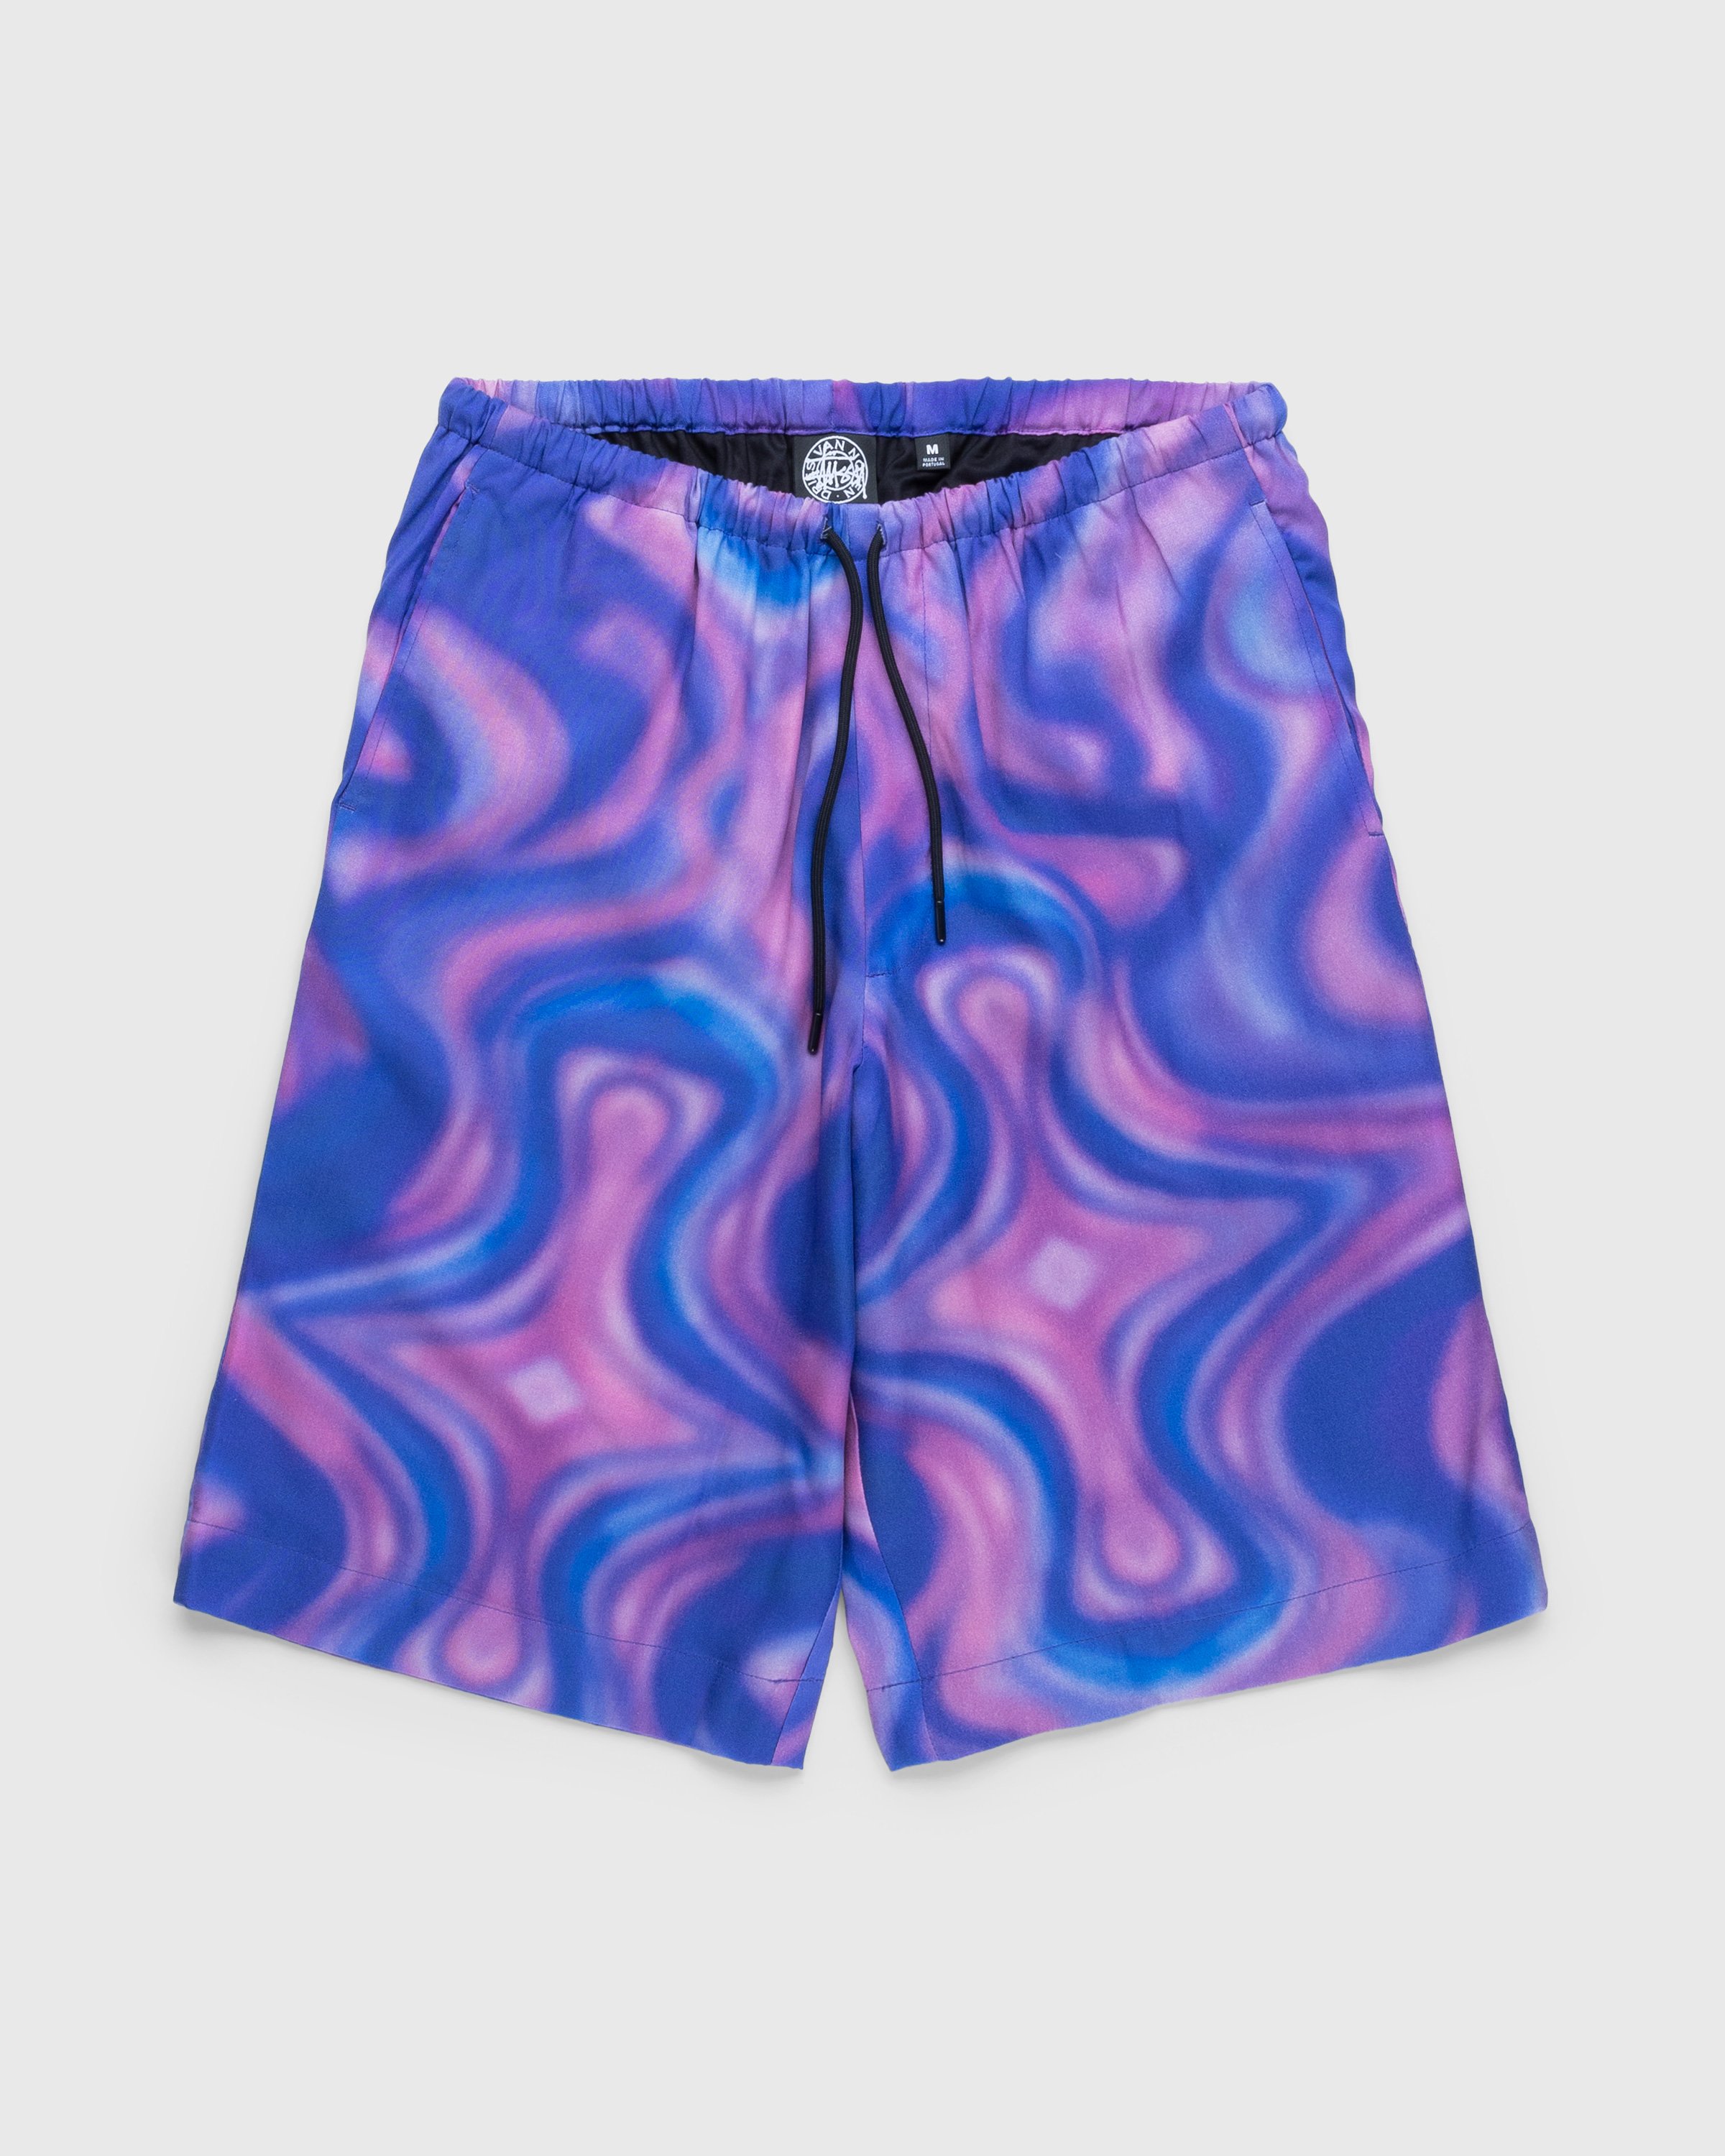 Stüssy x Dries van Noten - Airbrush Shrooms Shorts - Clothing - Purple - Image 1